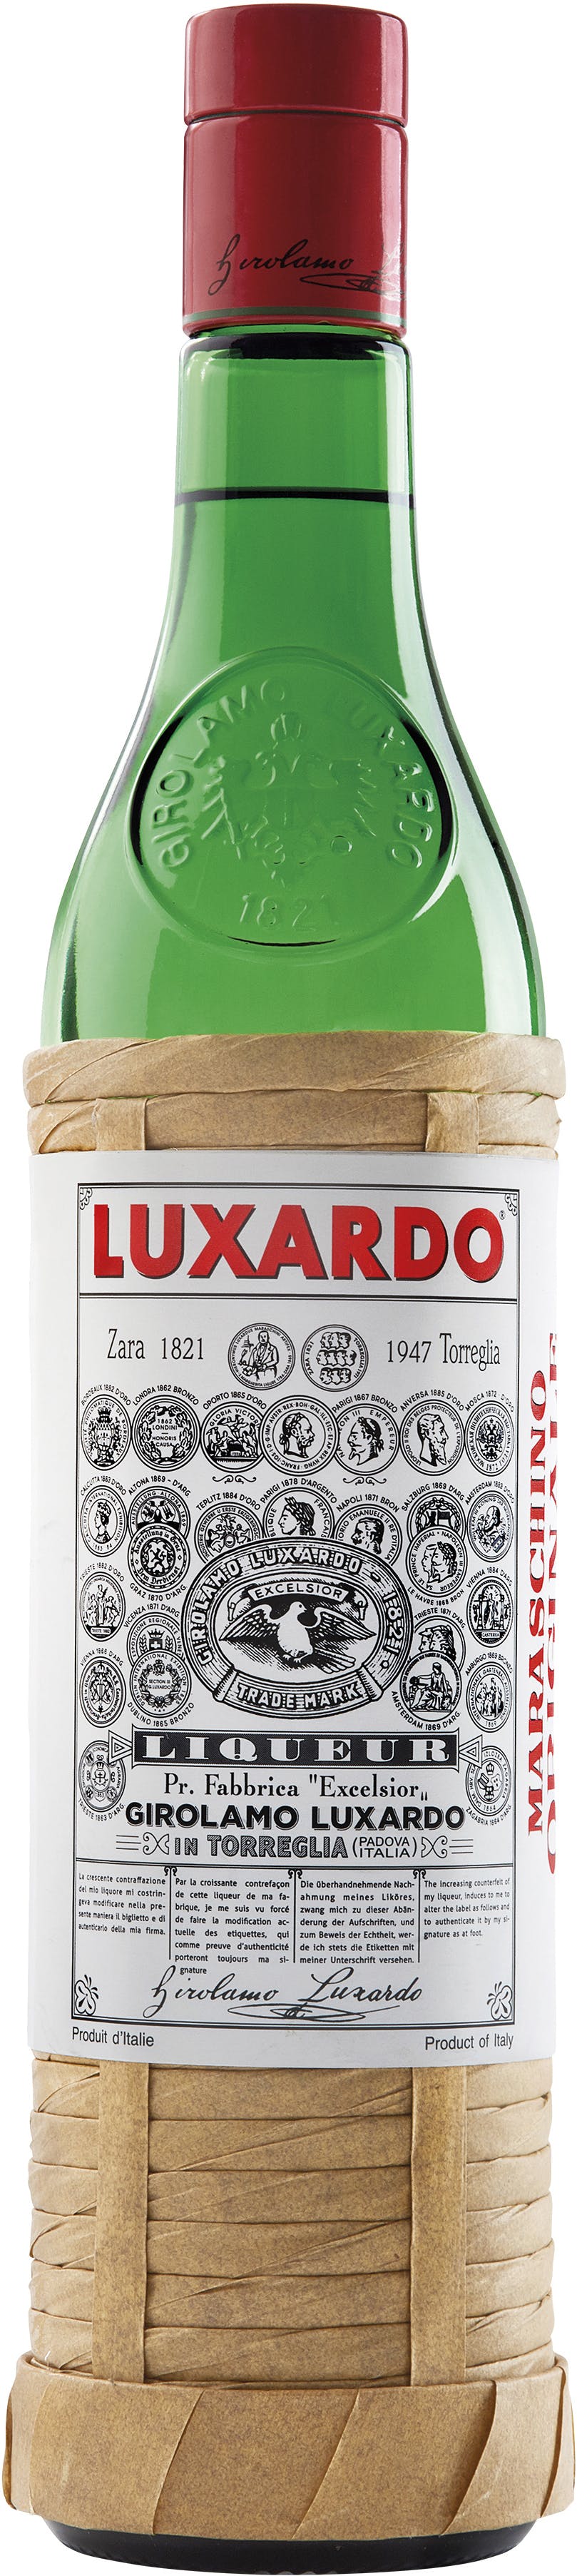 Liqueurs Kelly\'s $50 Italy Liquor - - $25 to Wine Luxardo Cordials - - & - Enthusiast